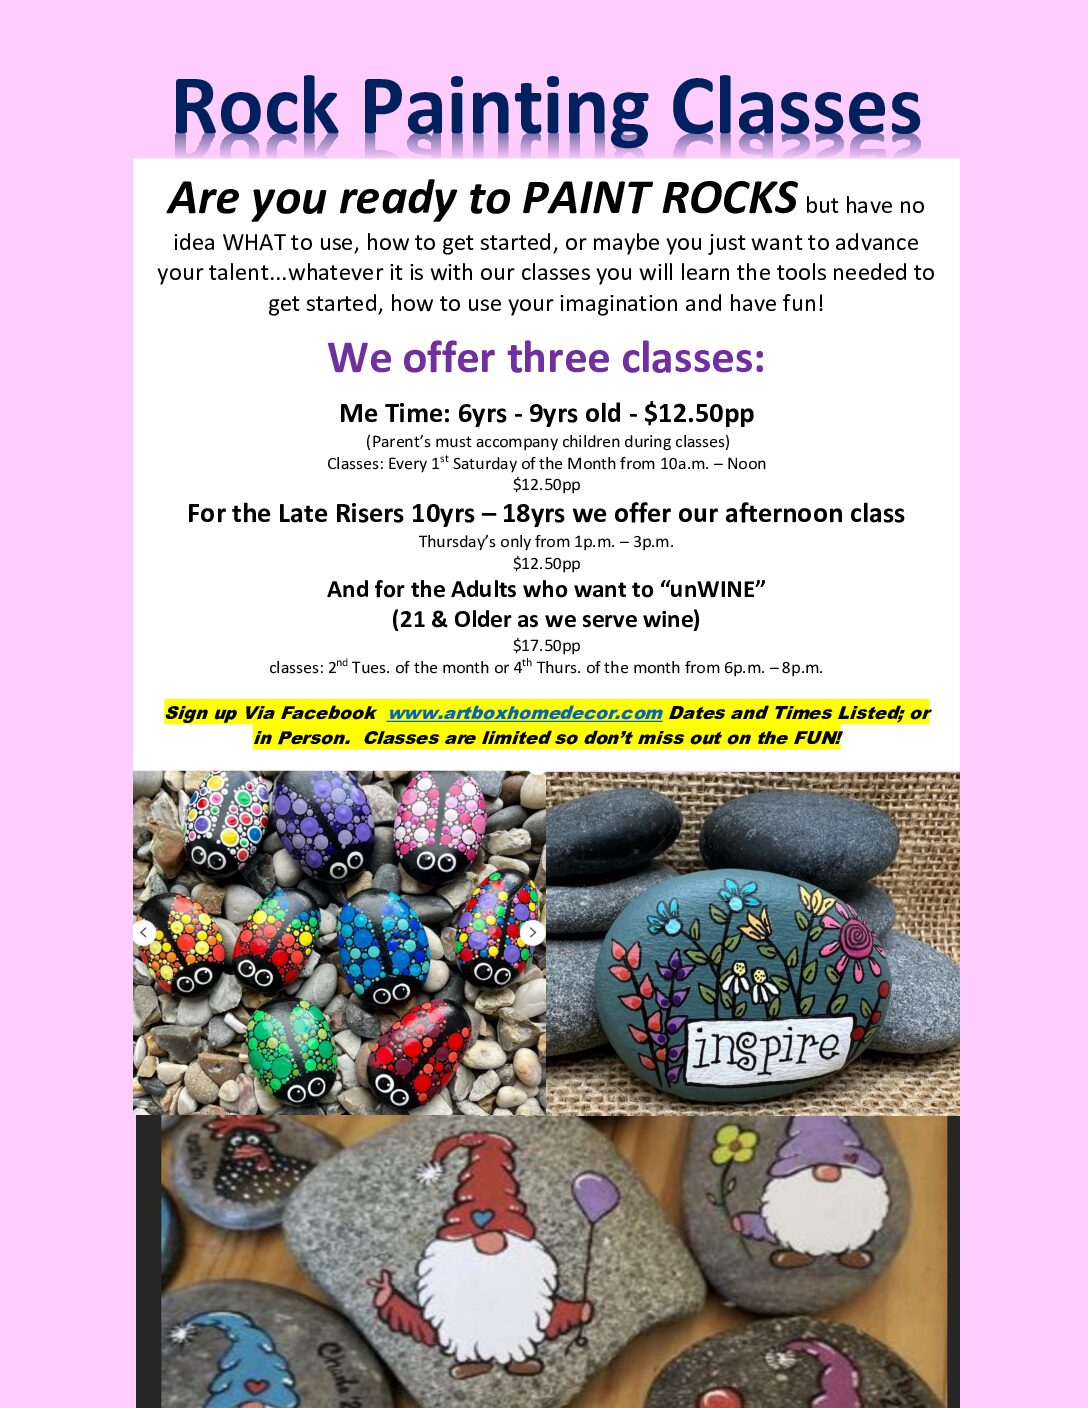 Rock Painting Class at Art Box Home Decor